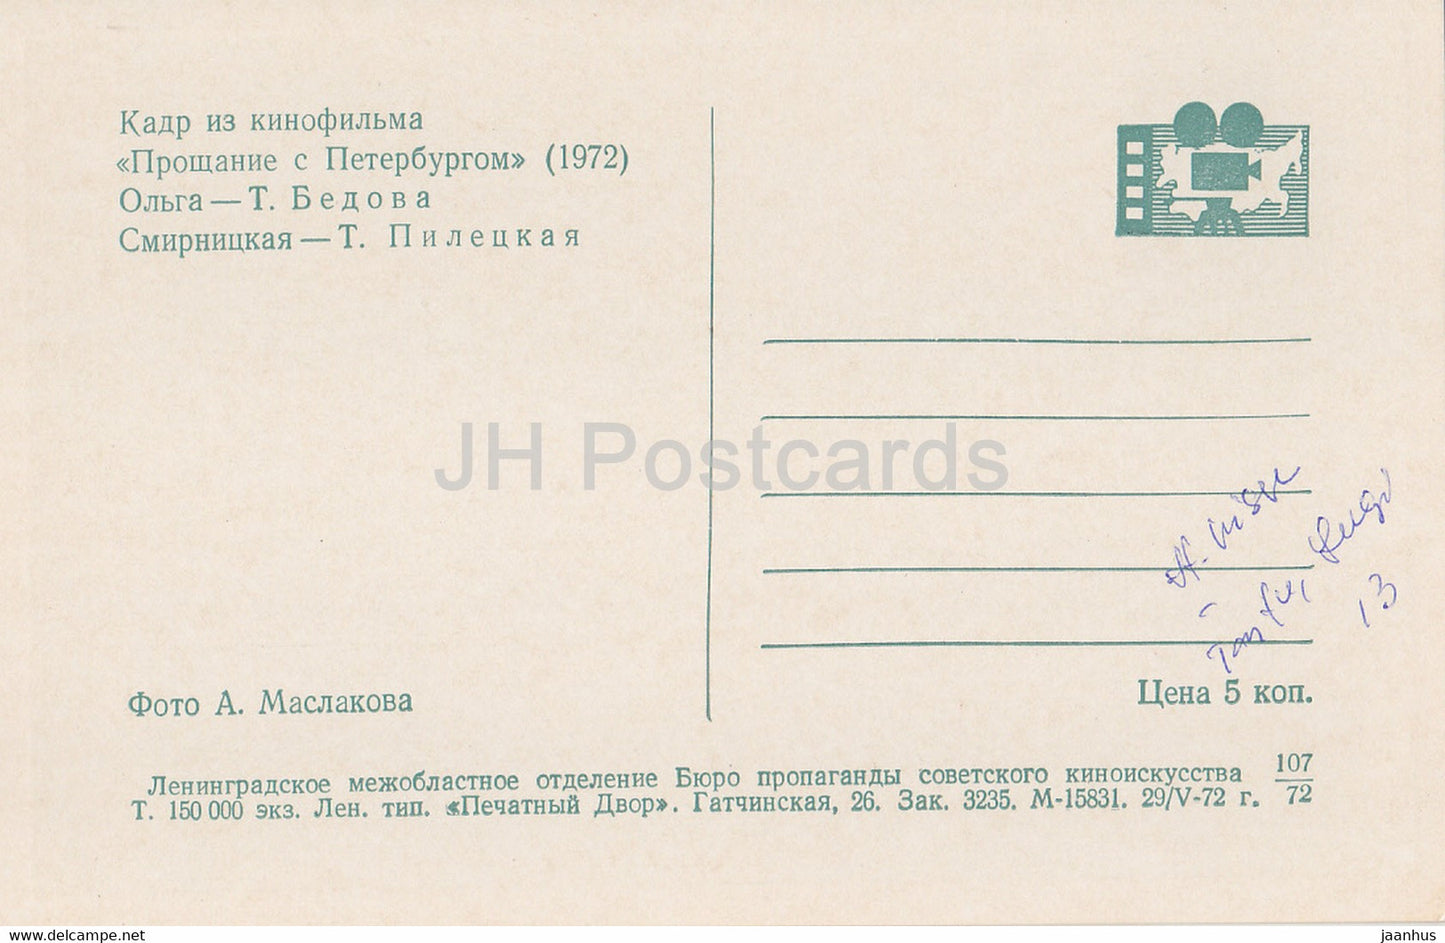 Farewell to St. Petersburg - actress T. Bedova T. Piletskaya - Movie - Film - soviet - 1972 - Russia USSR - unused